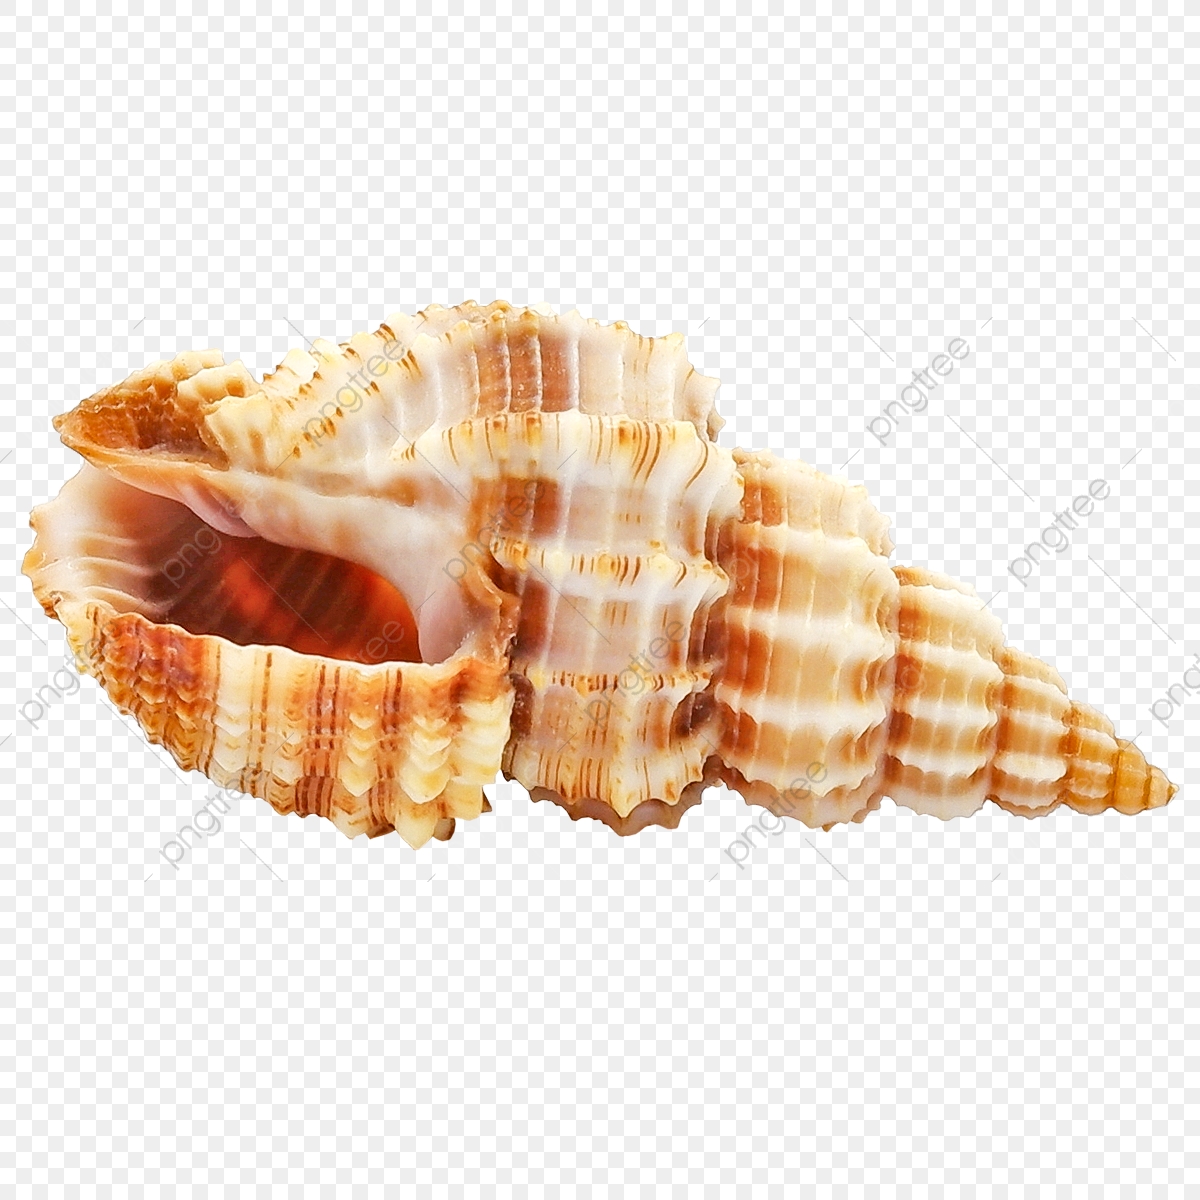 shell clipart natural